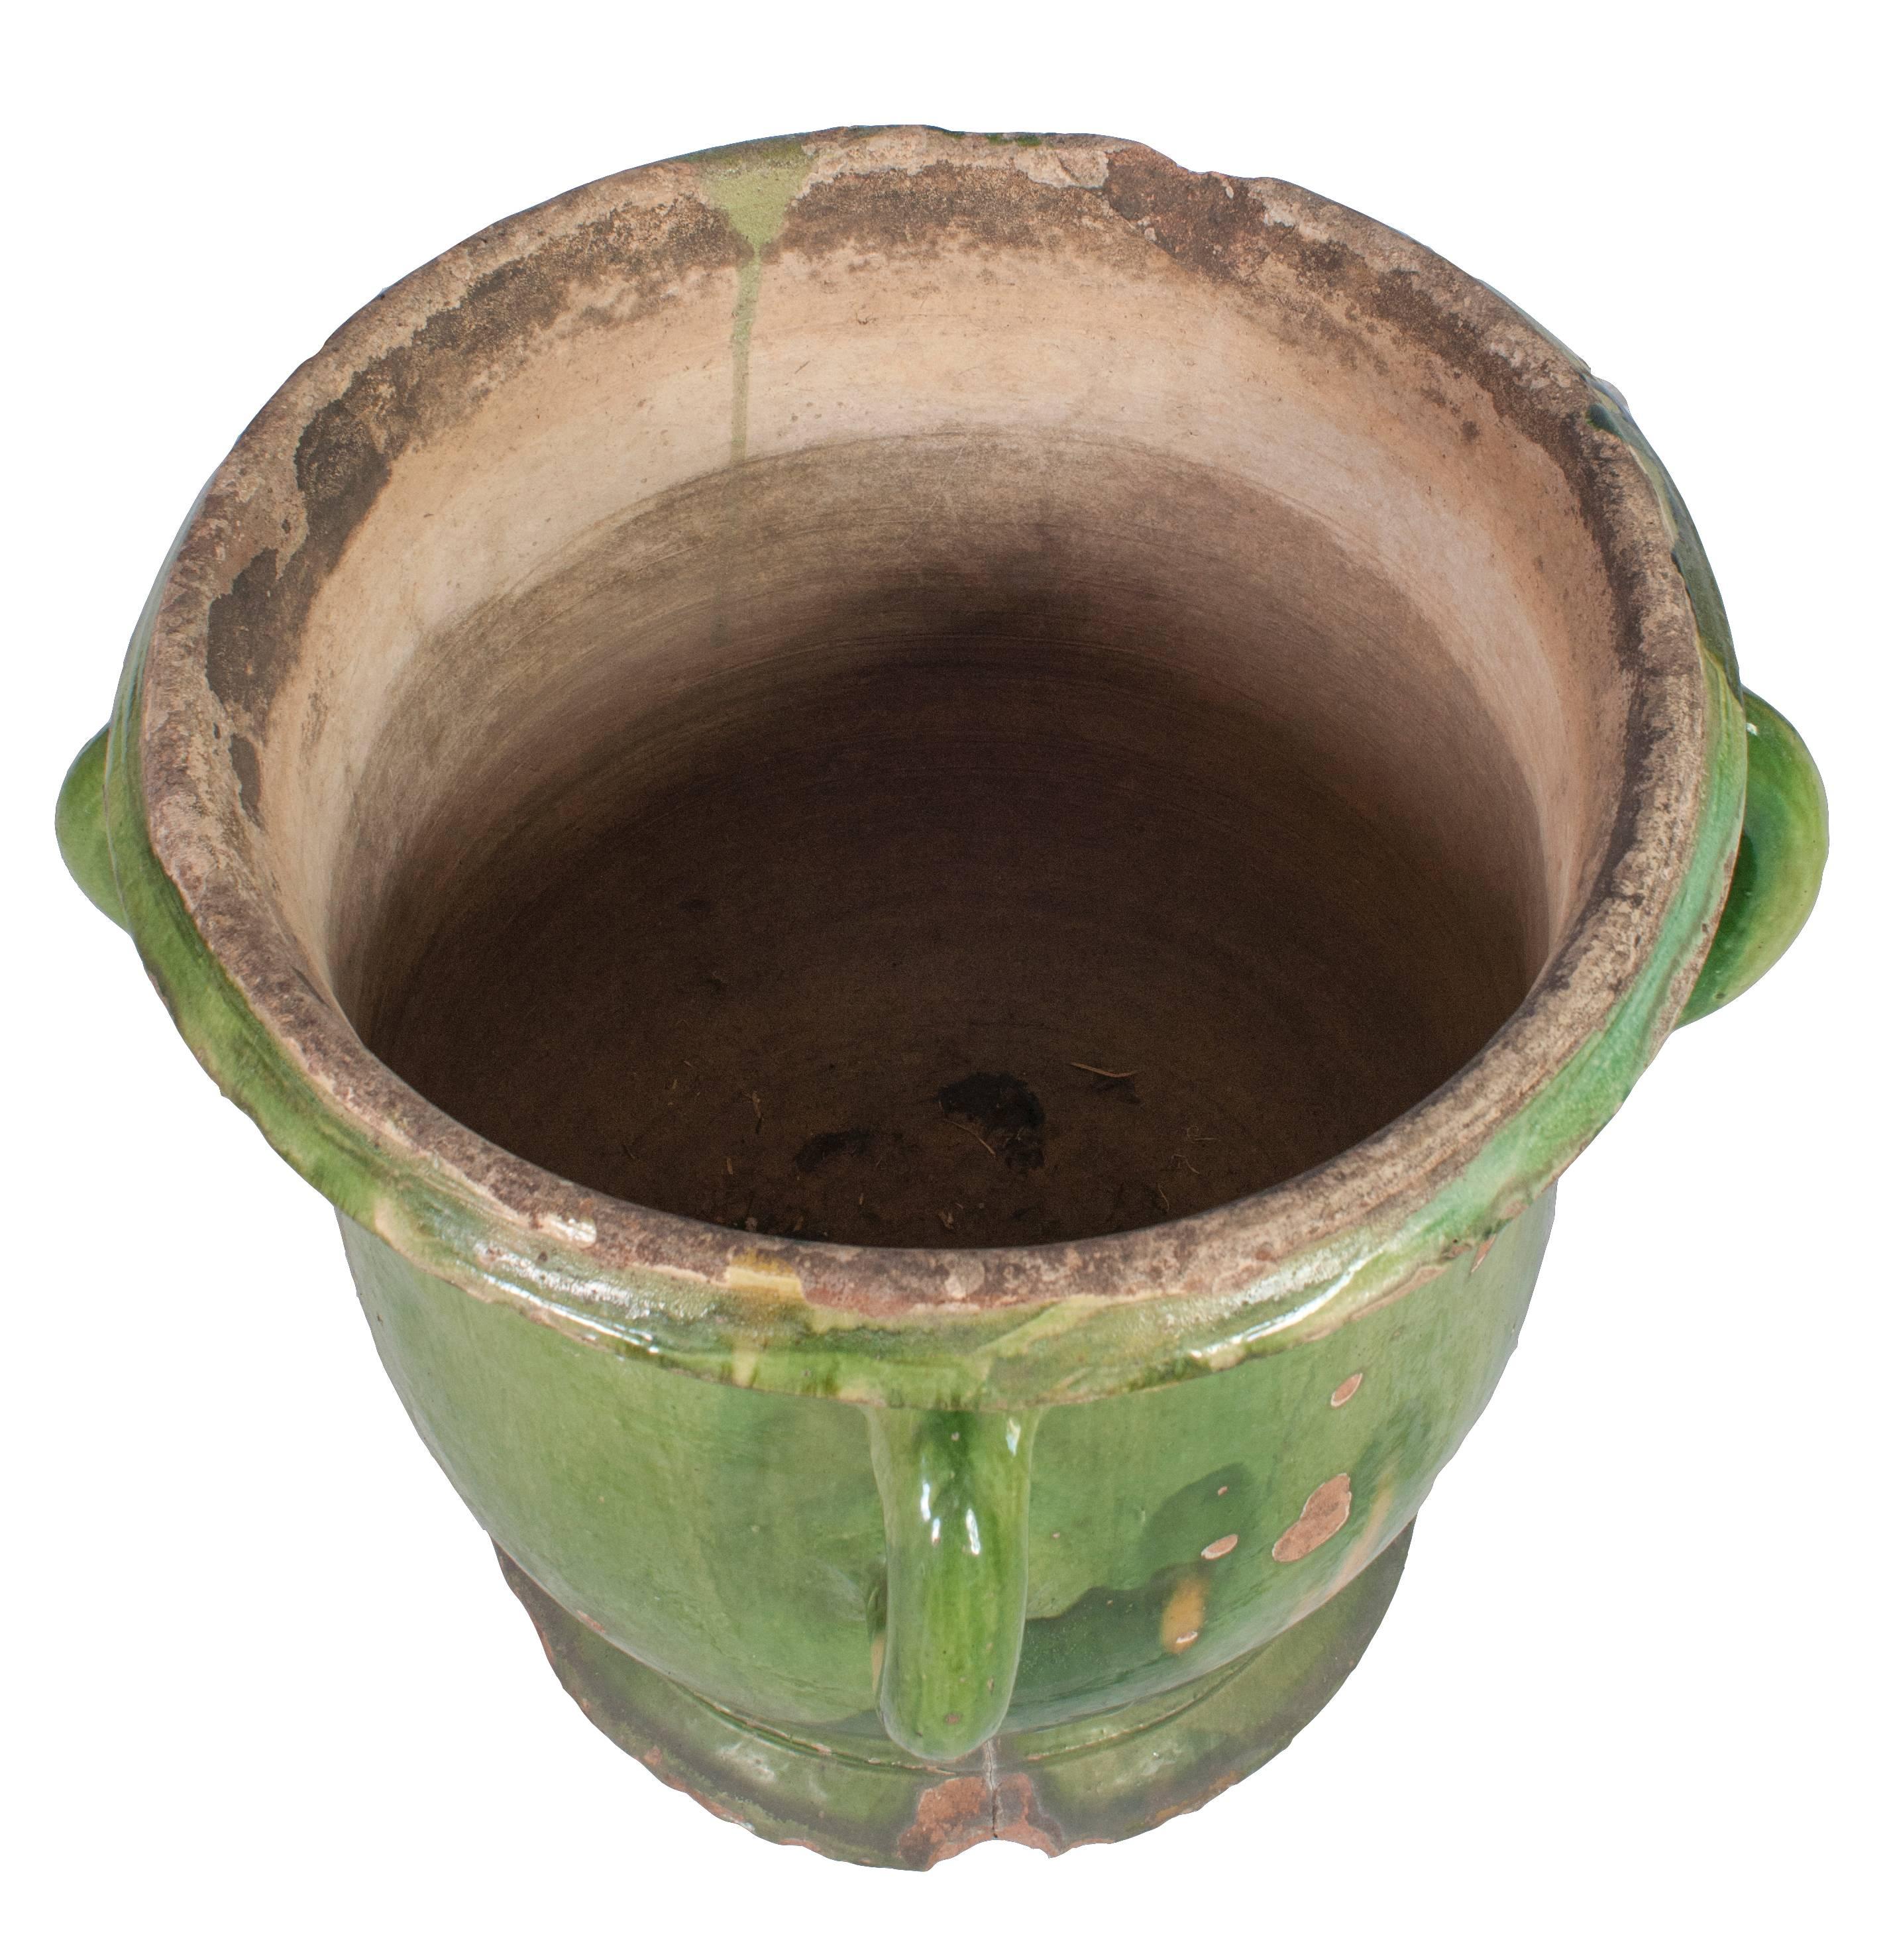 A Toulouse green Provencal pot.